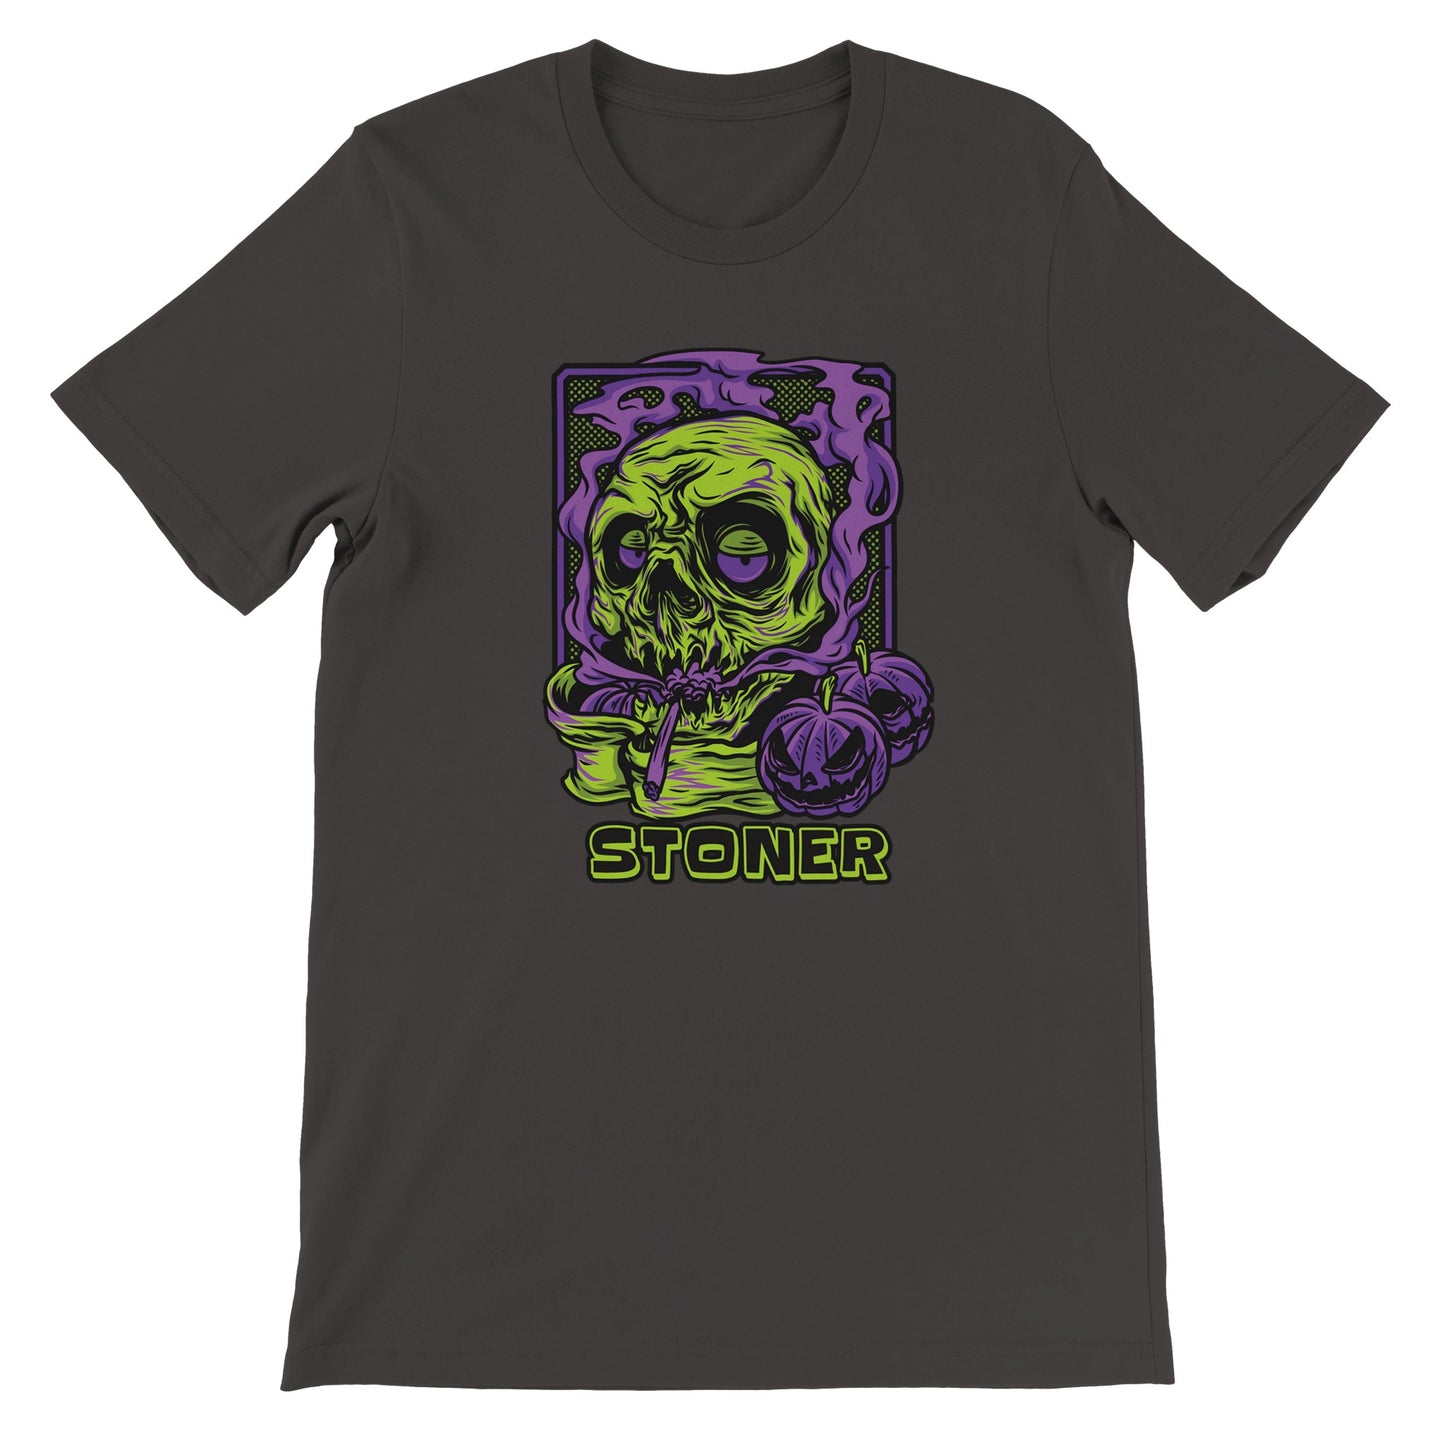 Stoner Metal Theme T-shirt dankweedtees